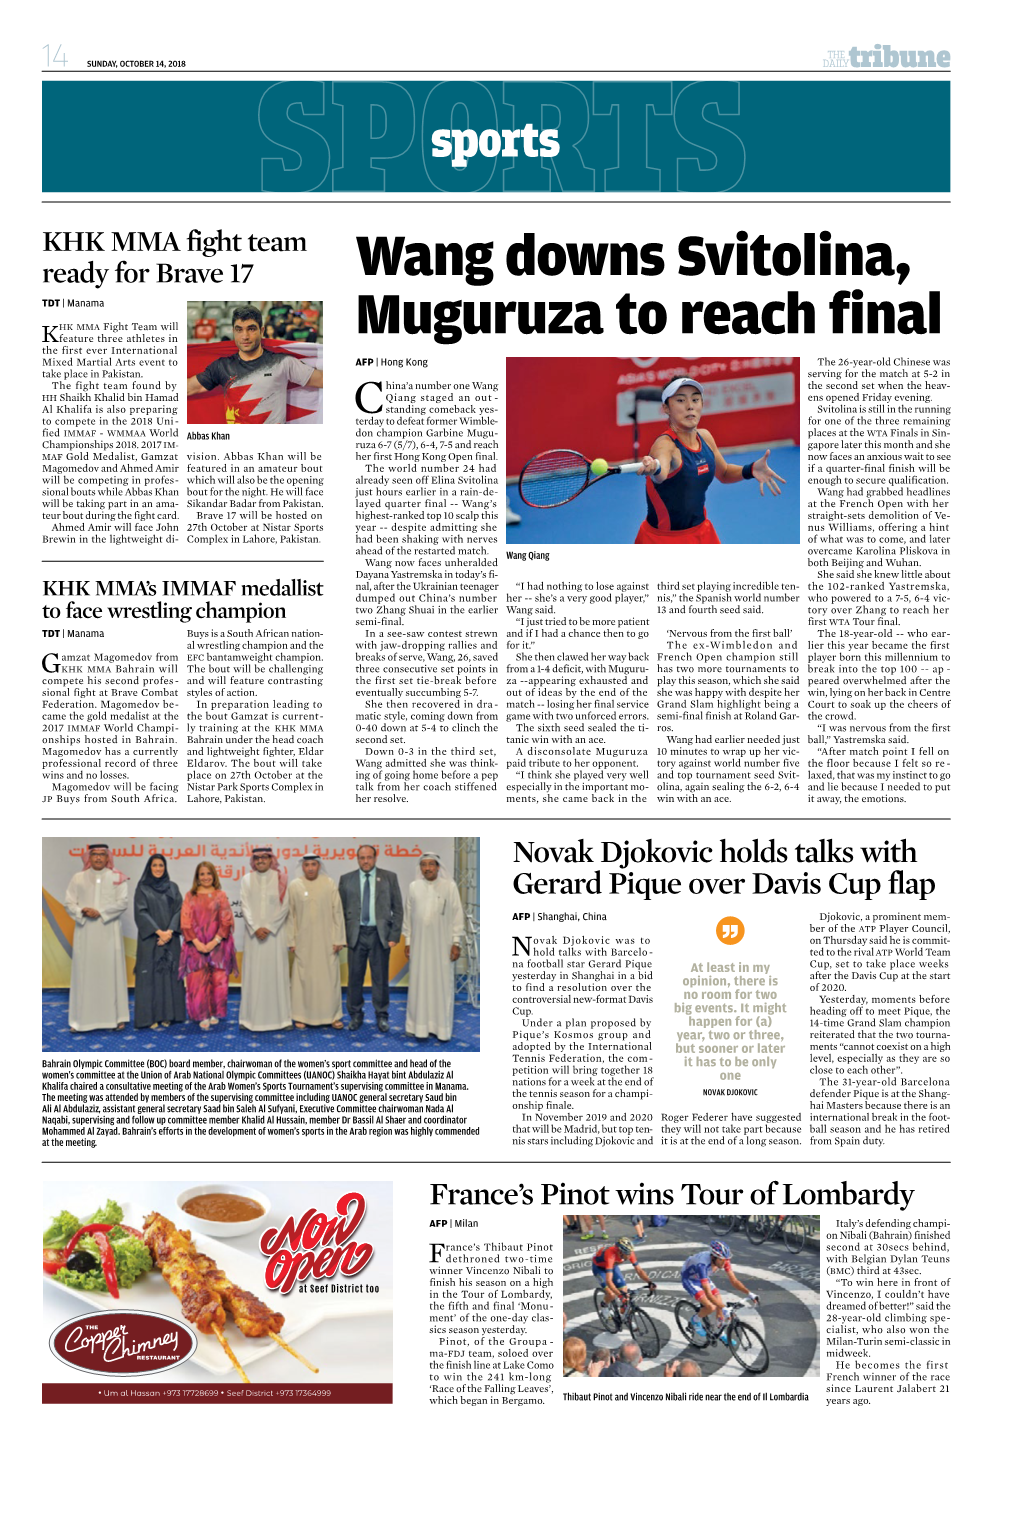 Wang Downs Svitolina, Muguruza to Reach Final